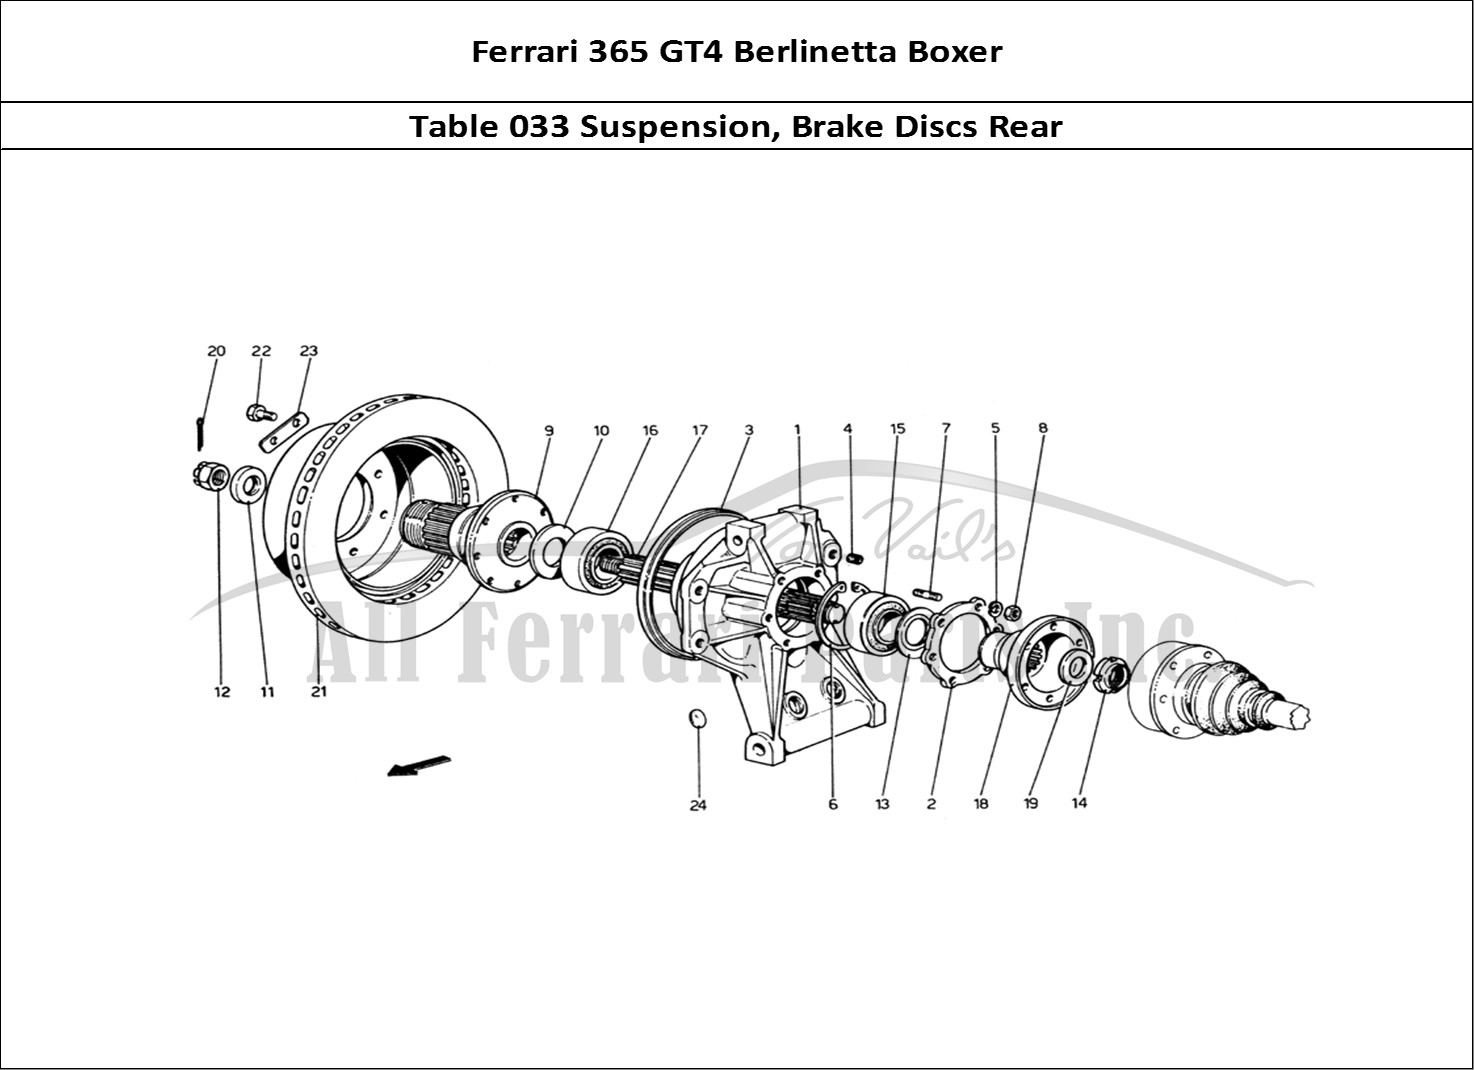 Ferrari Parts Ferrari 365 GT4 Berlinetta Boxer Page 033 Rear Suspension - Brake D